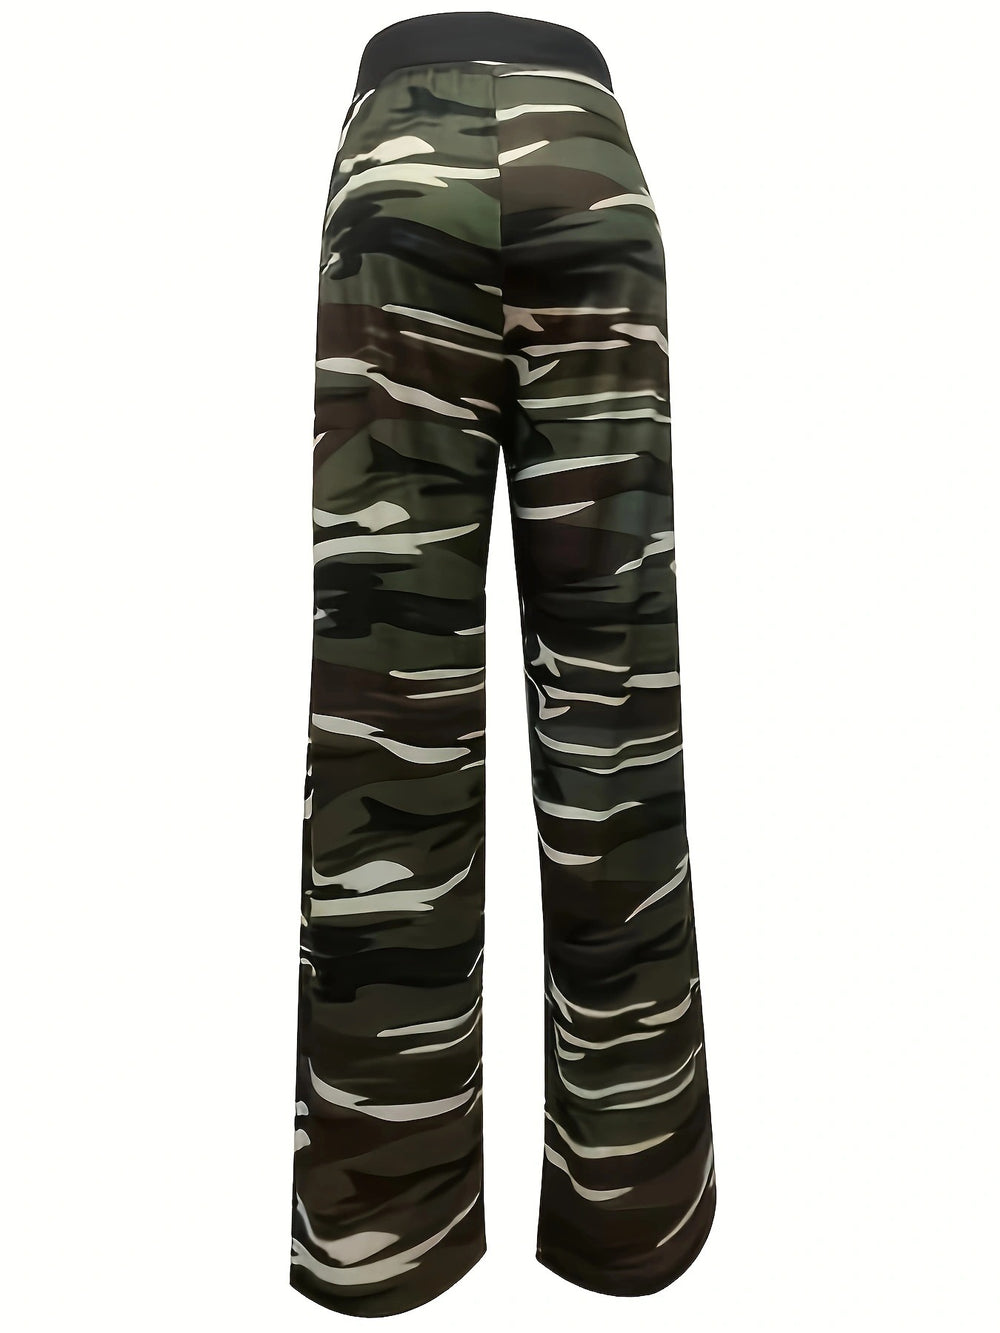 Camouflage Print Comfort Casual Elastic Rope Pajama Pants Wide Leg Pants Women Clothing